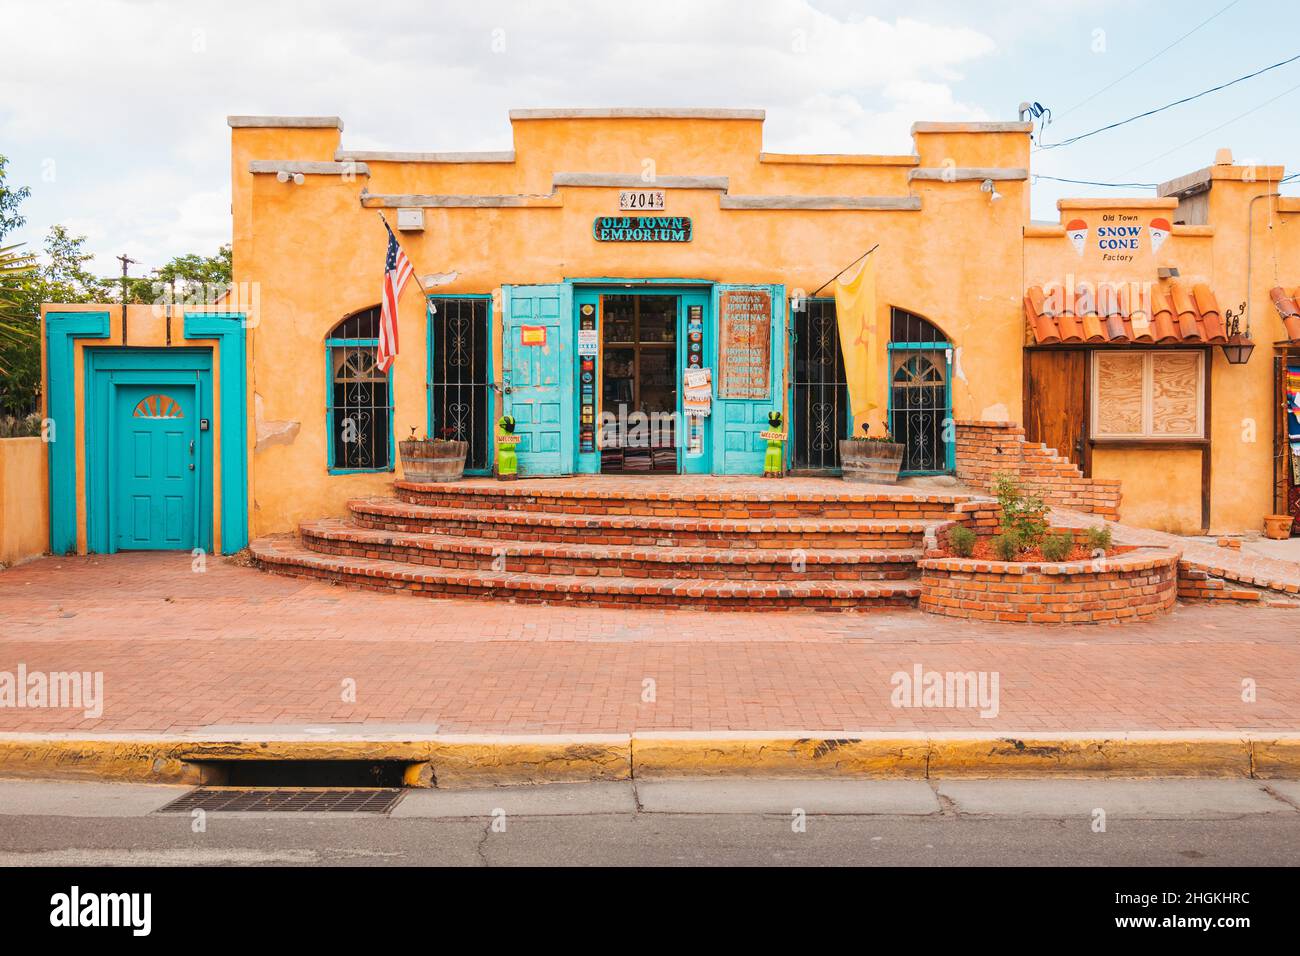 The Old Town Emporium in Albuquerque, New Mexico Stock Photo